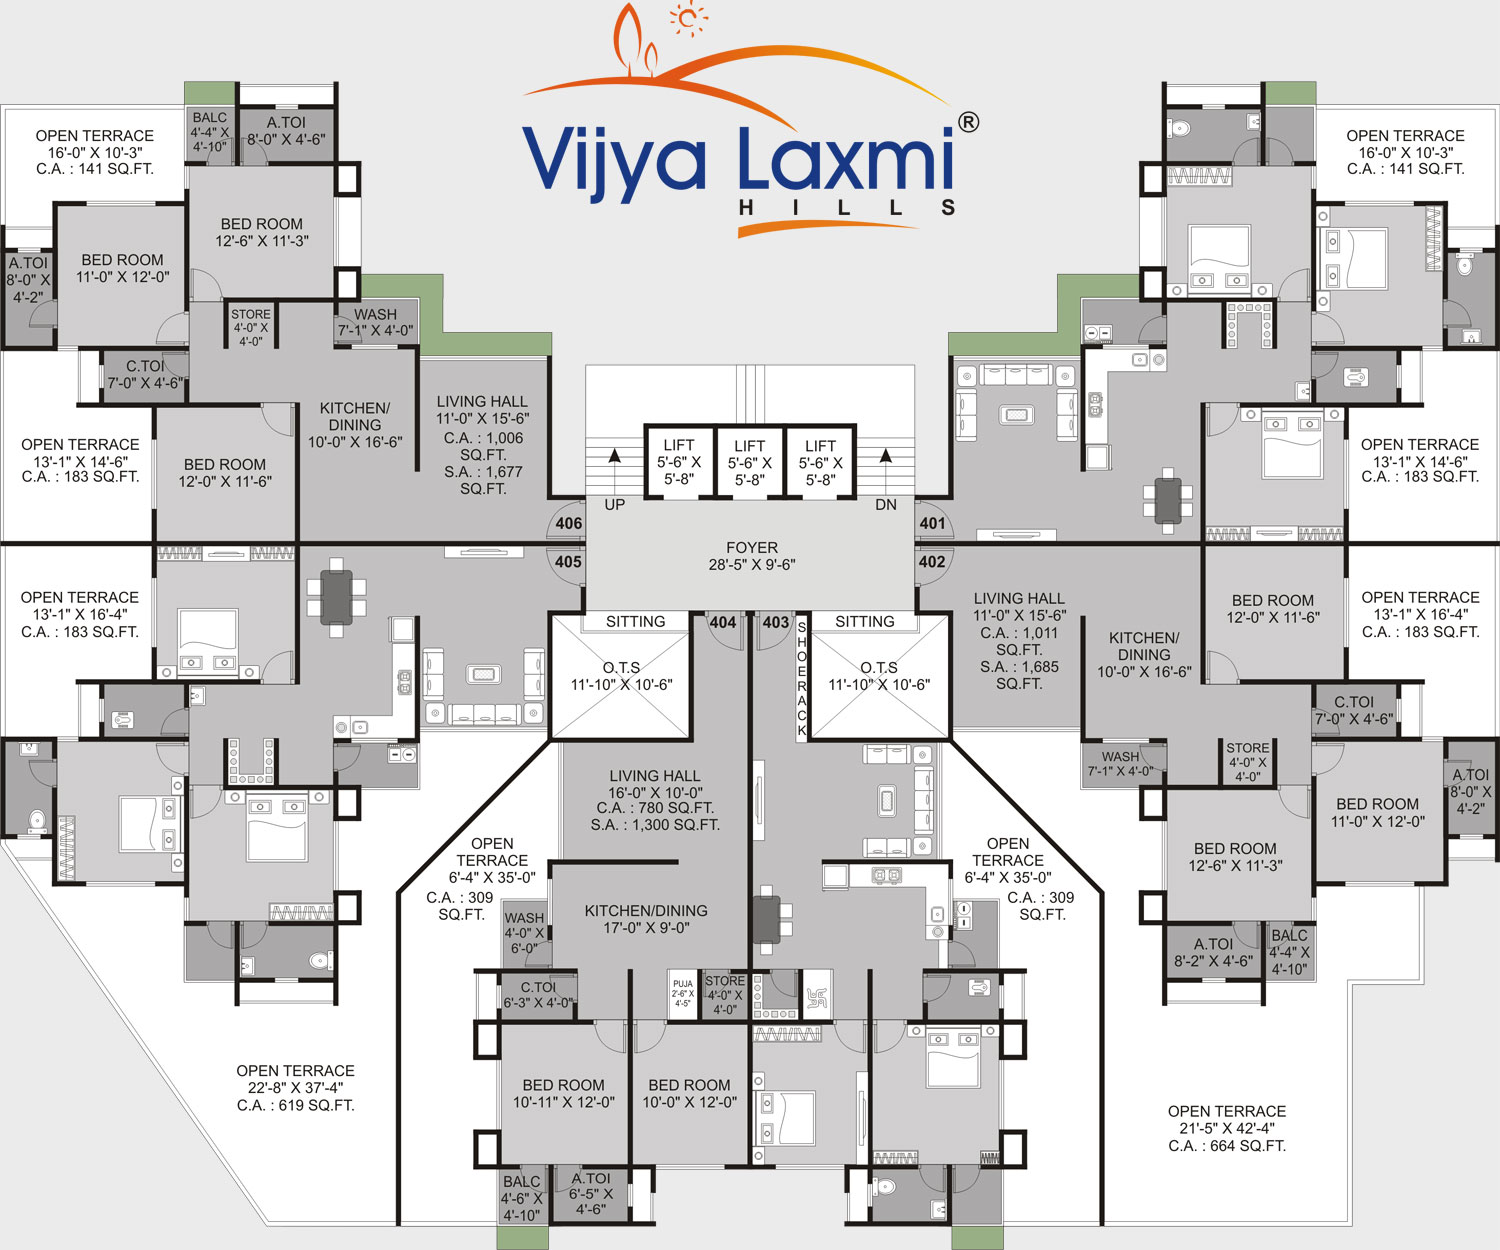 Fourth Floor Plan Vijya Laxmi Hills Surat Gujarat